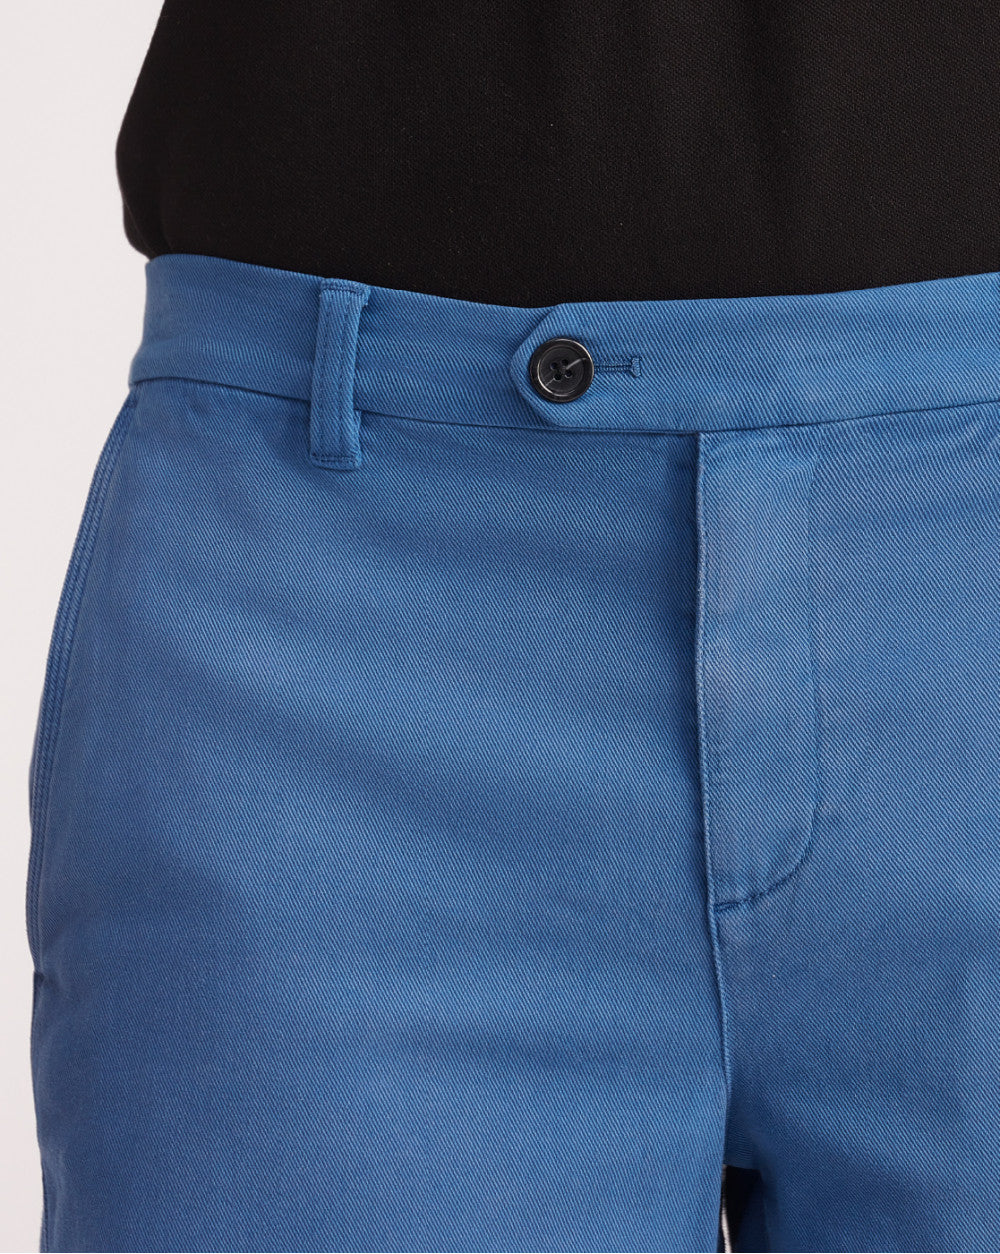 Garment Dyed Elasticized Shorts - Federal Blue